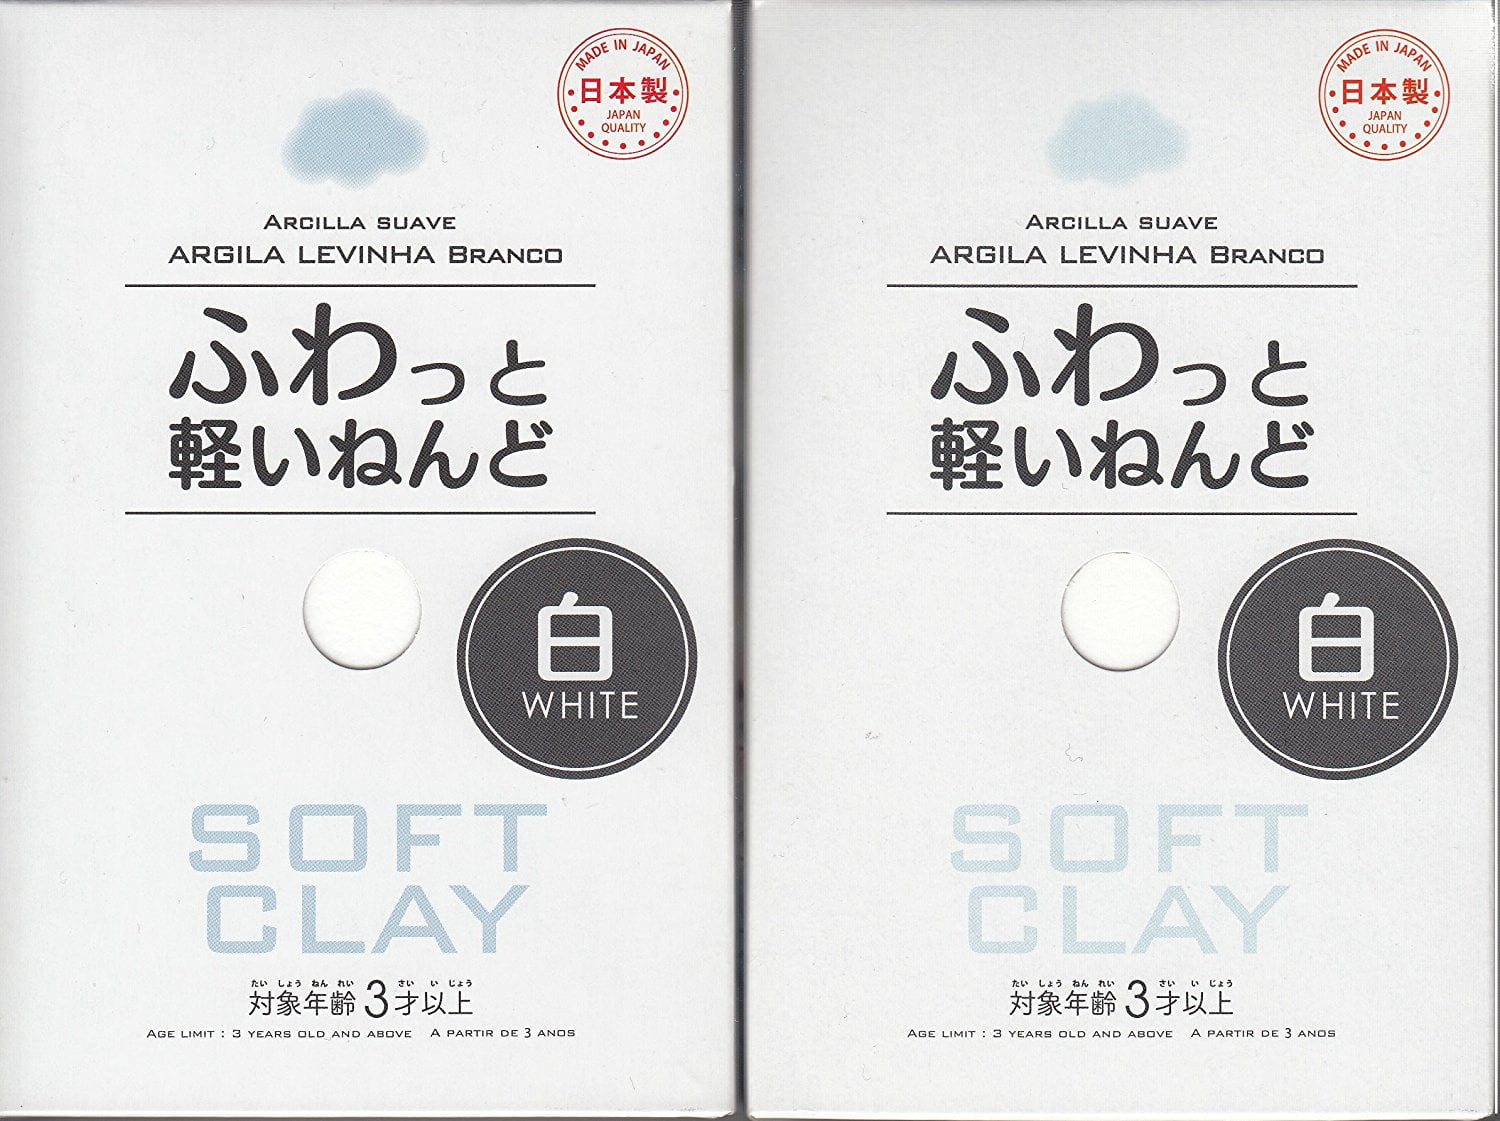 Daiso Soft Clay White 2 Set Arcilla Suave Light weight Craft Work Japan New 